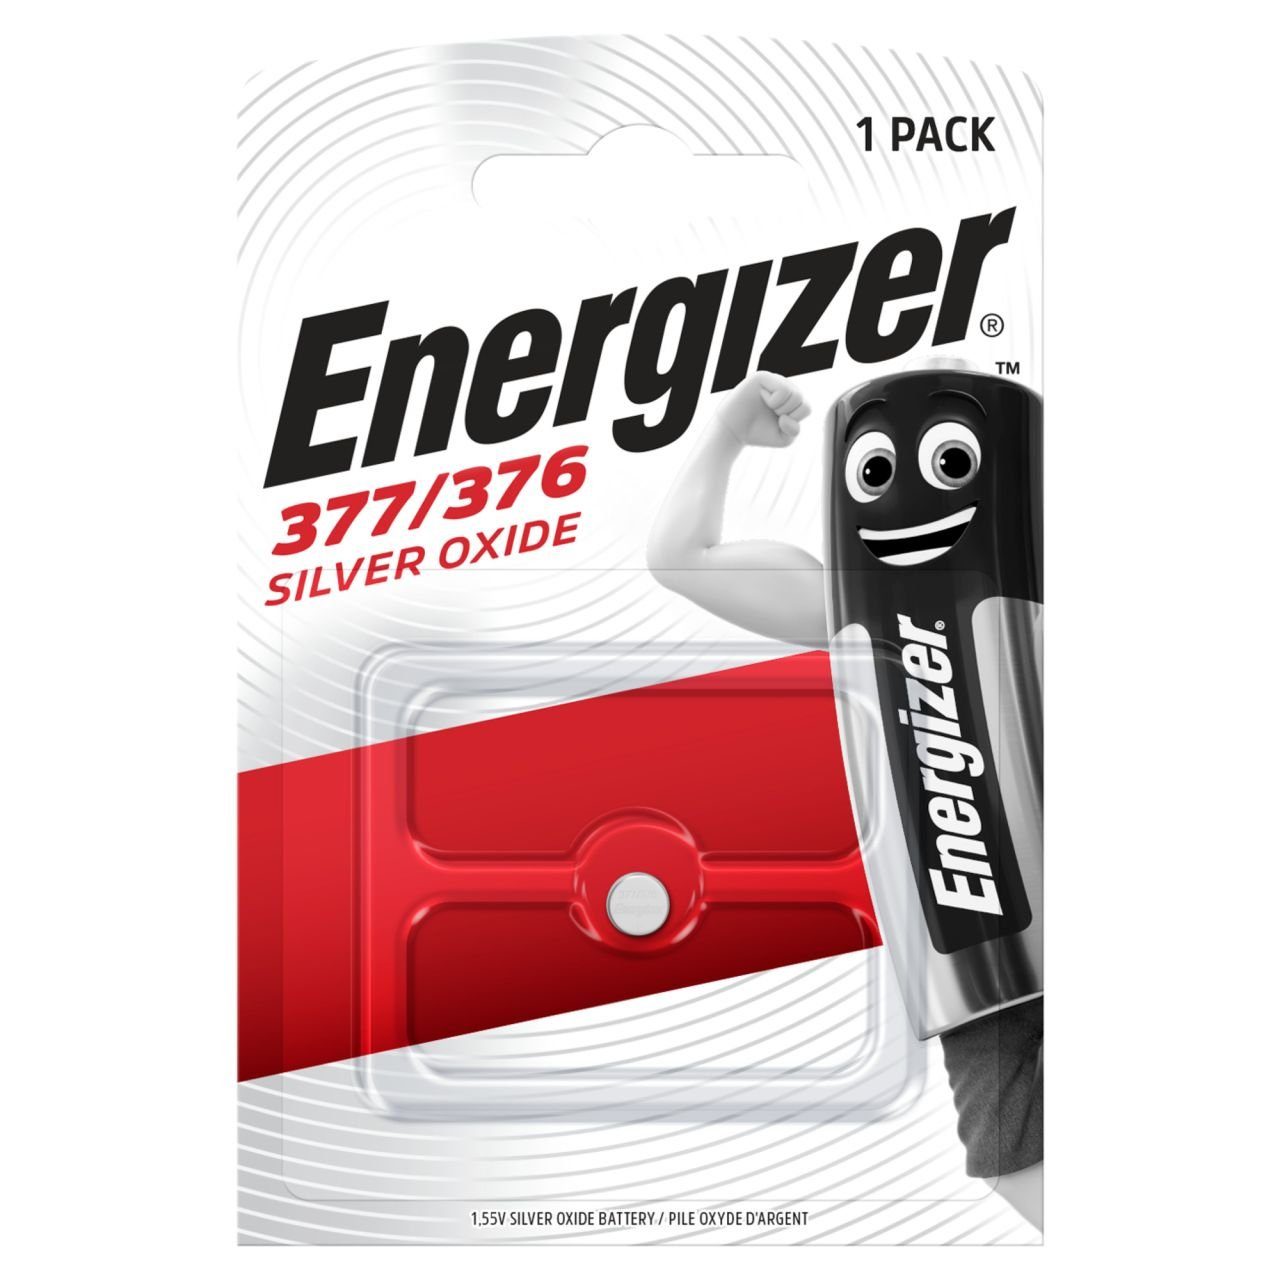 Energizer Energizer Knopfzelle 377/376 Silver Oxide, 1,55 V Knopfzelle